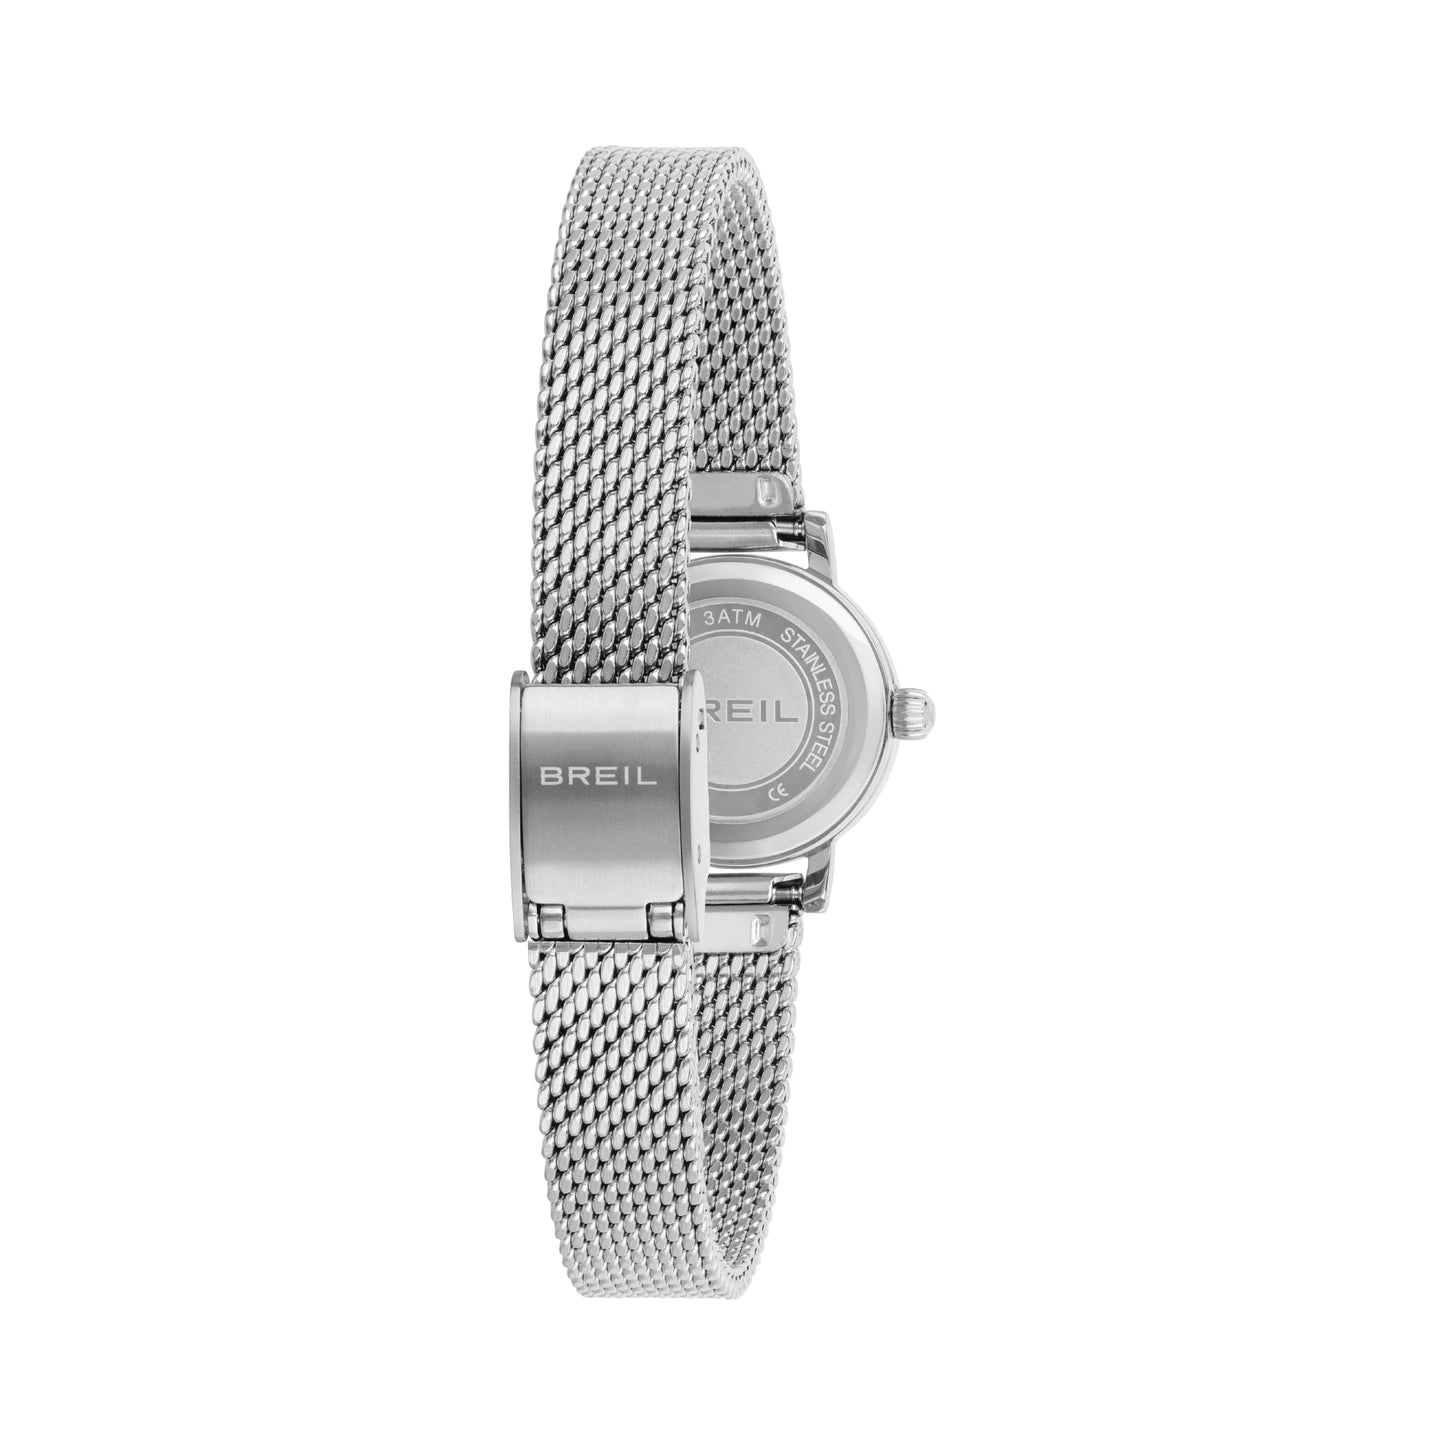 2H Darling Silver 18mm TW1934 Reloj para mujer